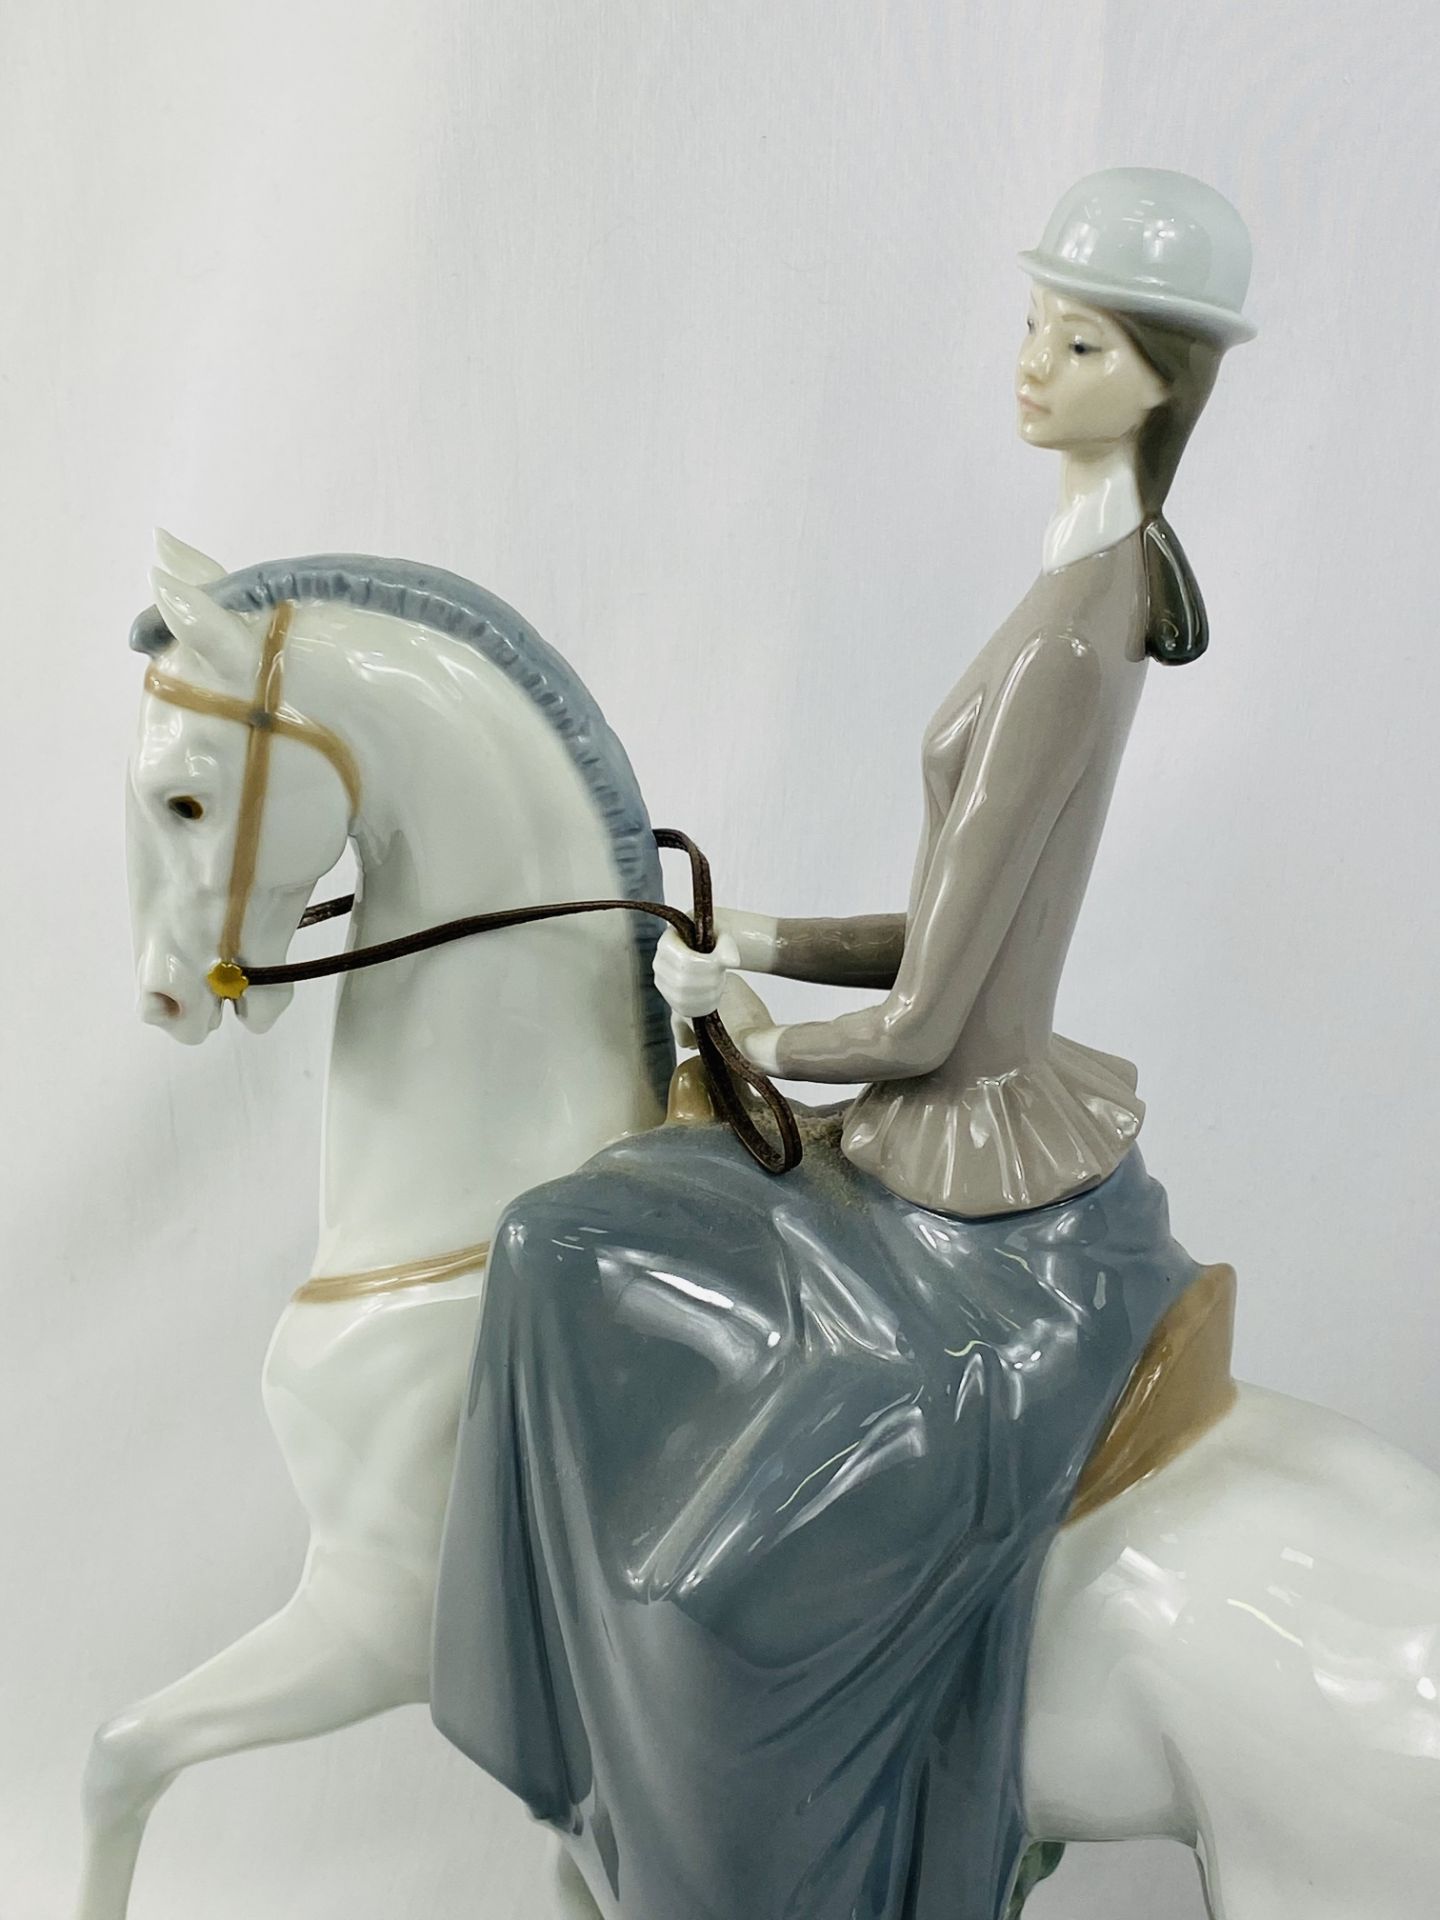 Lladro figure of a lady on horseback - Image 2 of 4